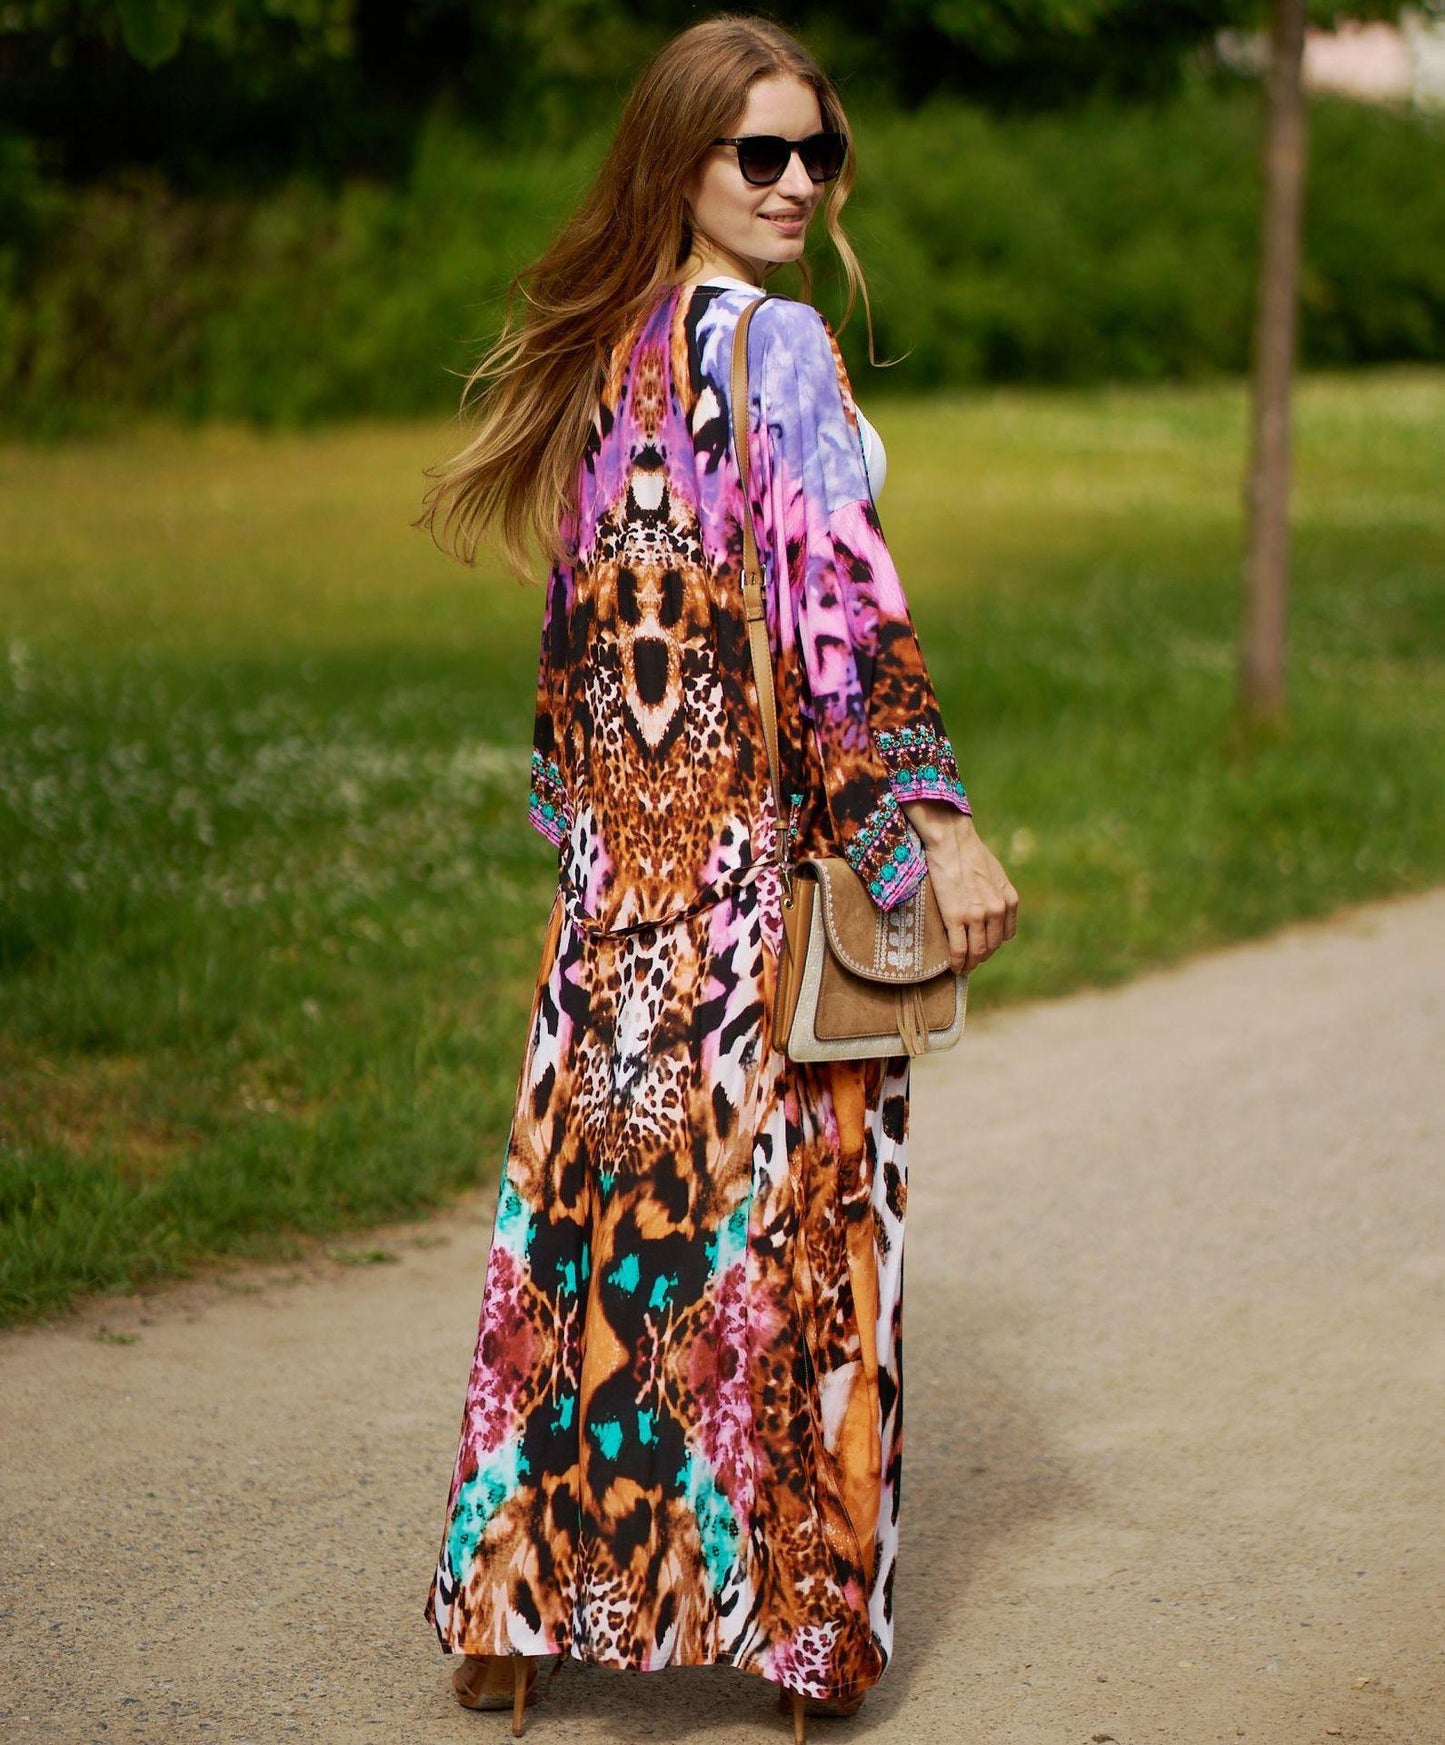 Summer Leopard Beachwear Cover Up Dresses